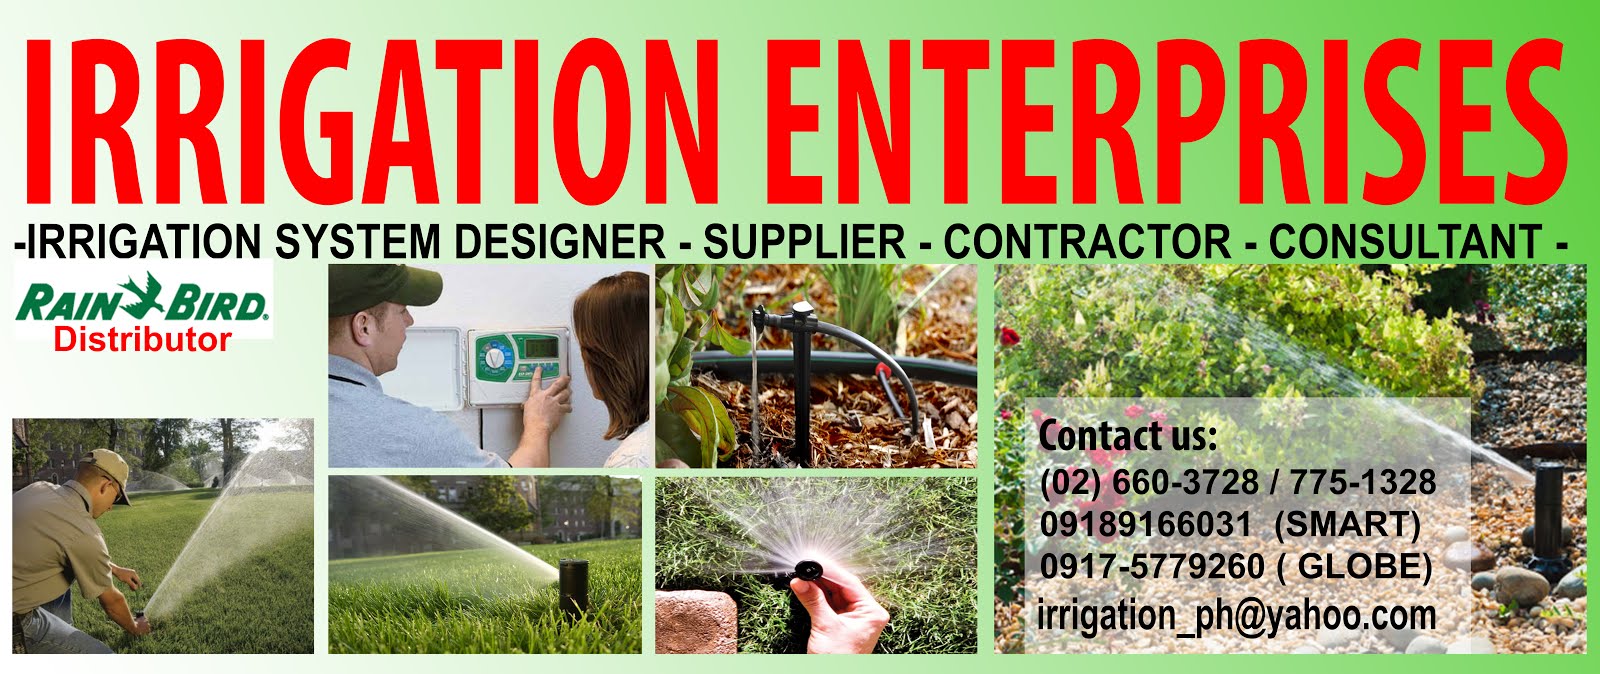 Irrigation Enterprises